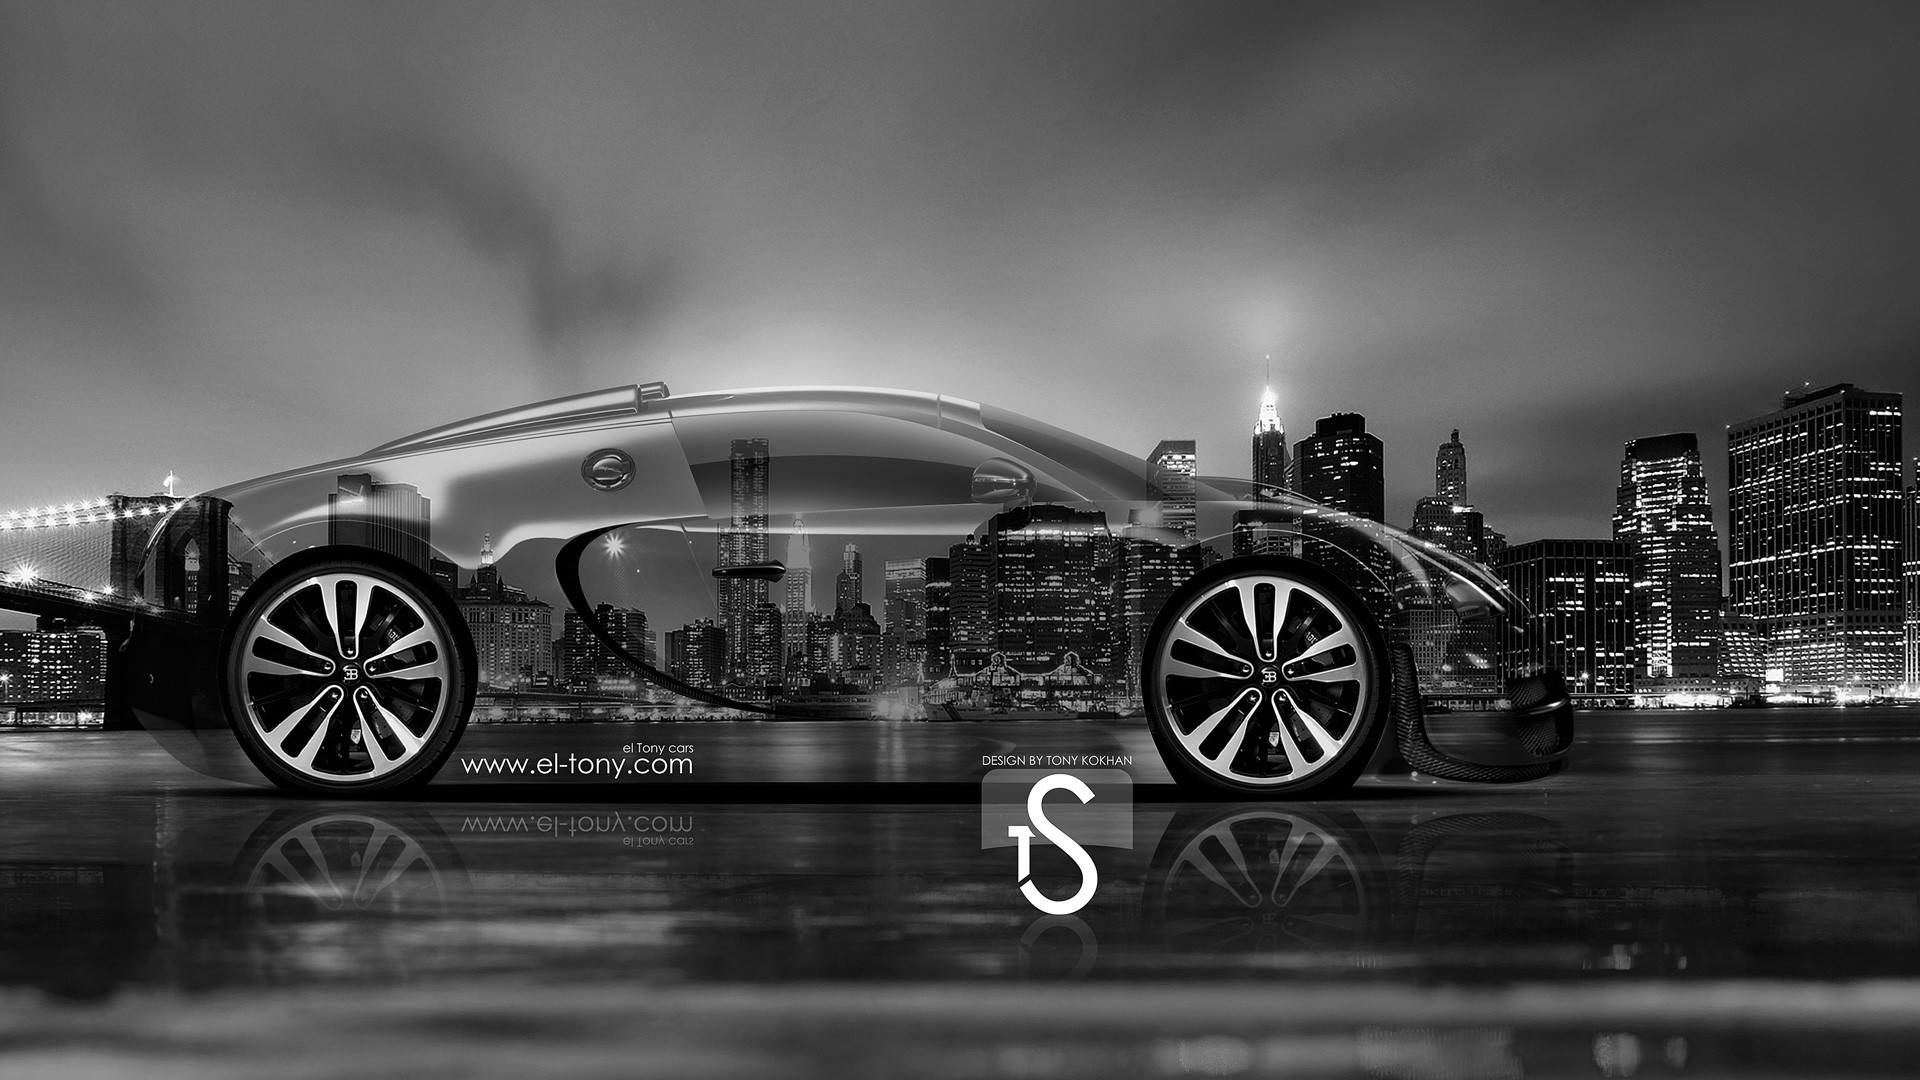 1920x1080 "Bugatti-Veyron-Crystal-City-Car-2014-HD-Wallpapers-design-by-Tony-Kokhan-www.el-tony.com_.jpg  (1920Ã1080) Bugatti Veyron Crystal City Car 2014" — card from ...